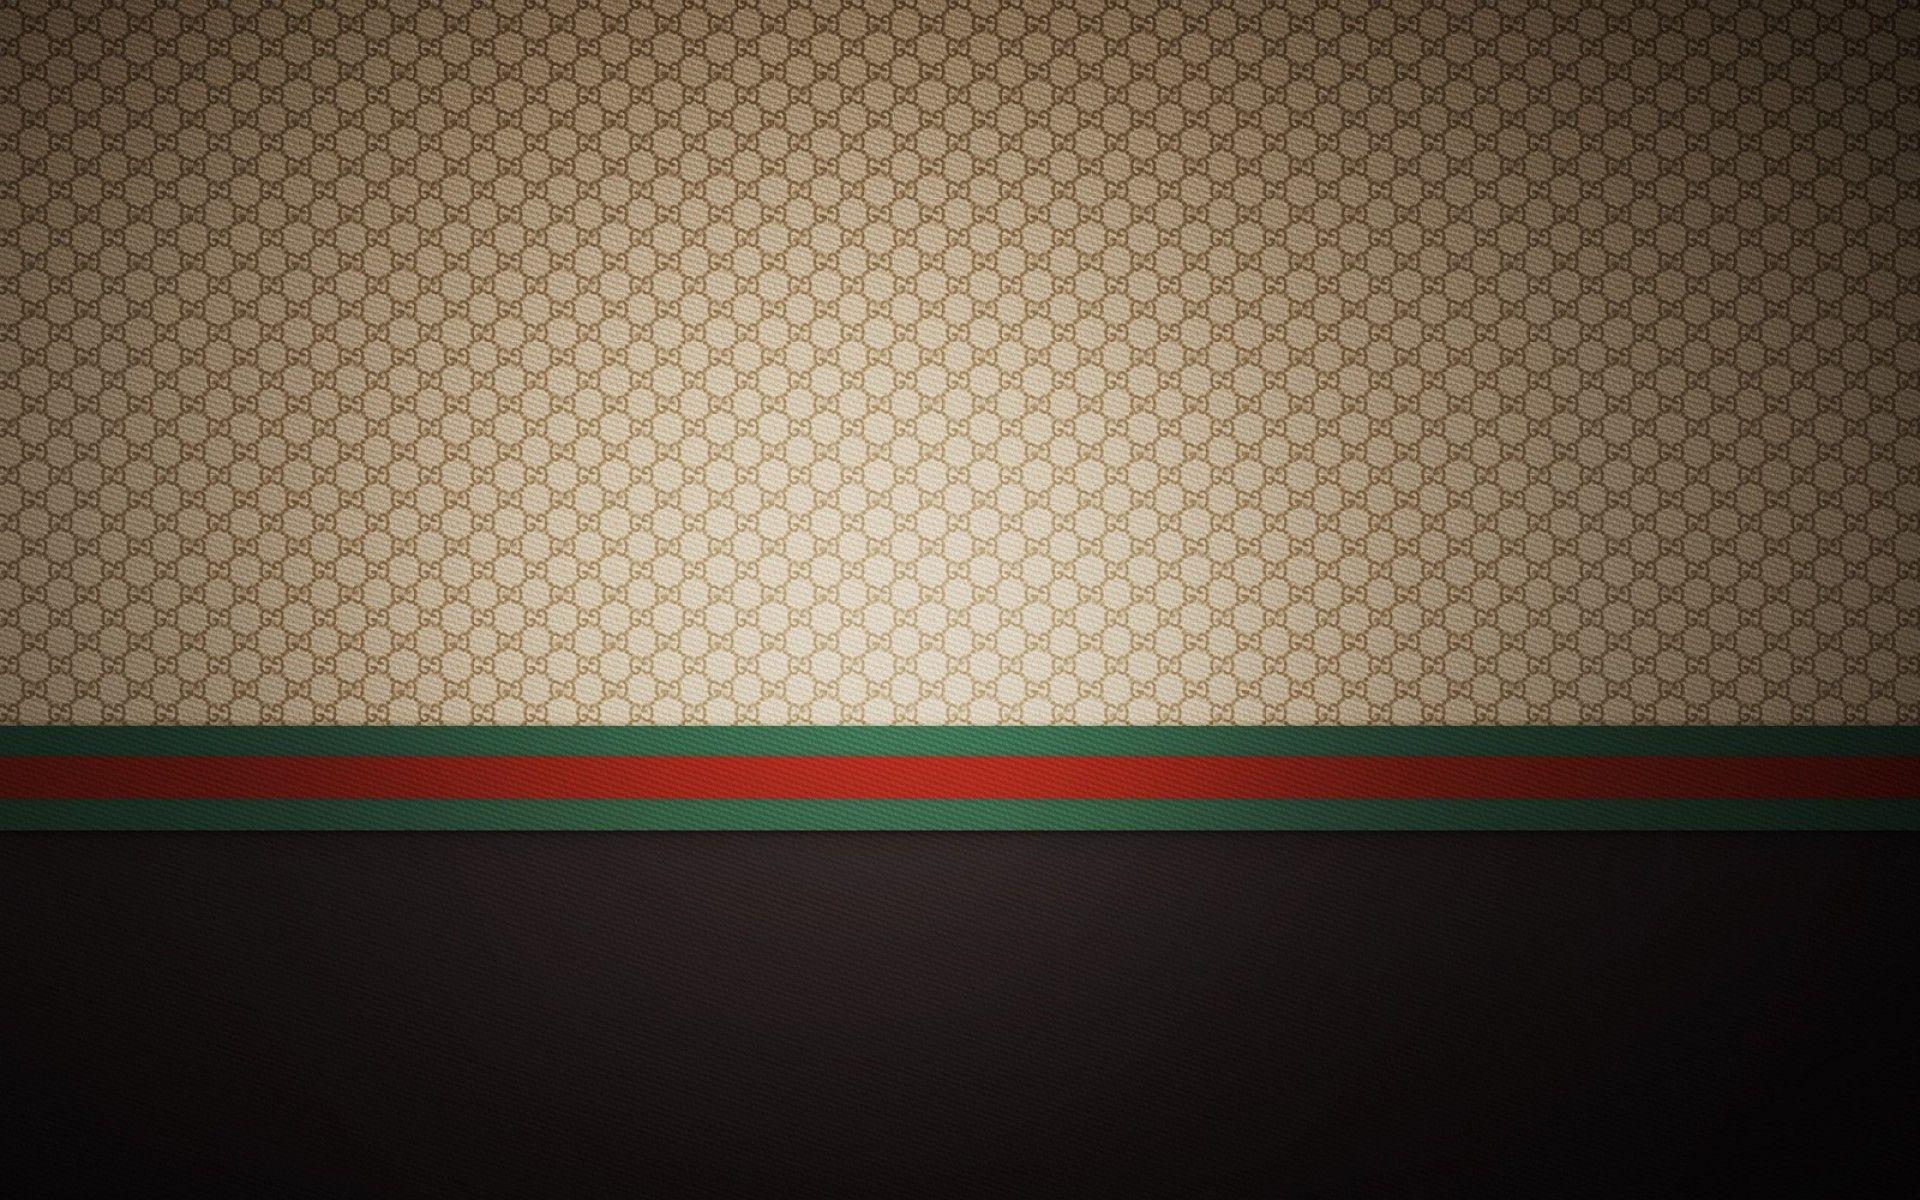 Gucci designer label patterns wall wallpaper HD. Wall wallpaper, Wall patterns, Wallpaper